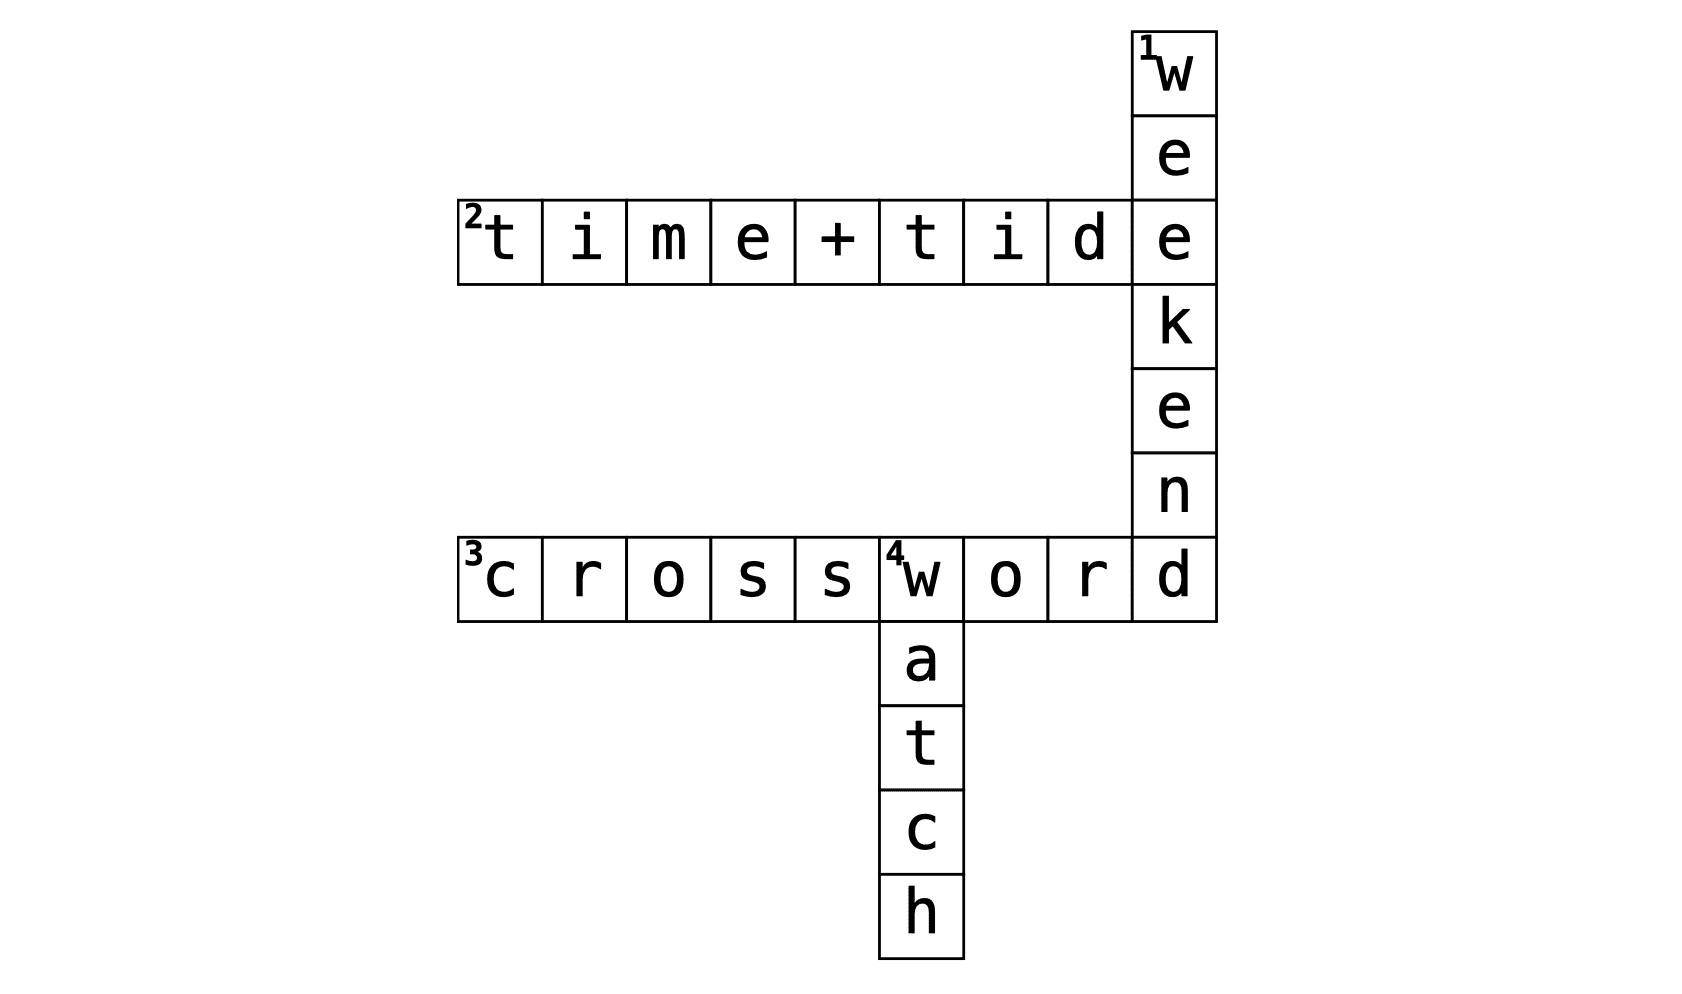 Time+Tide Weekend Watch Crossword: #16 “Watch Ambassadors”